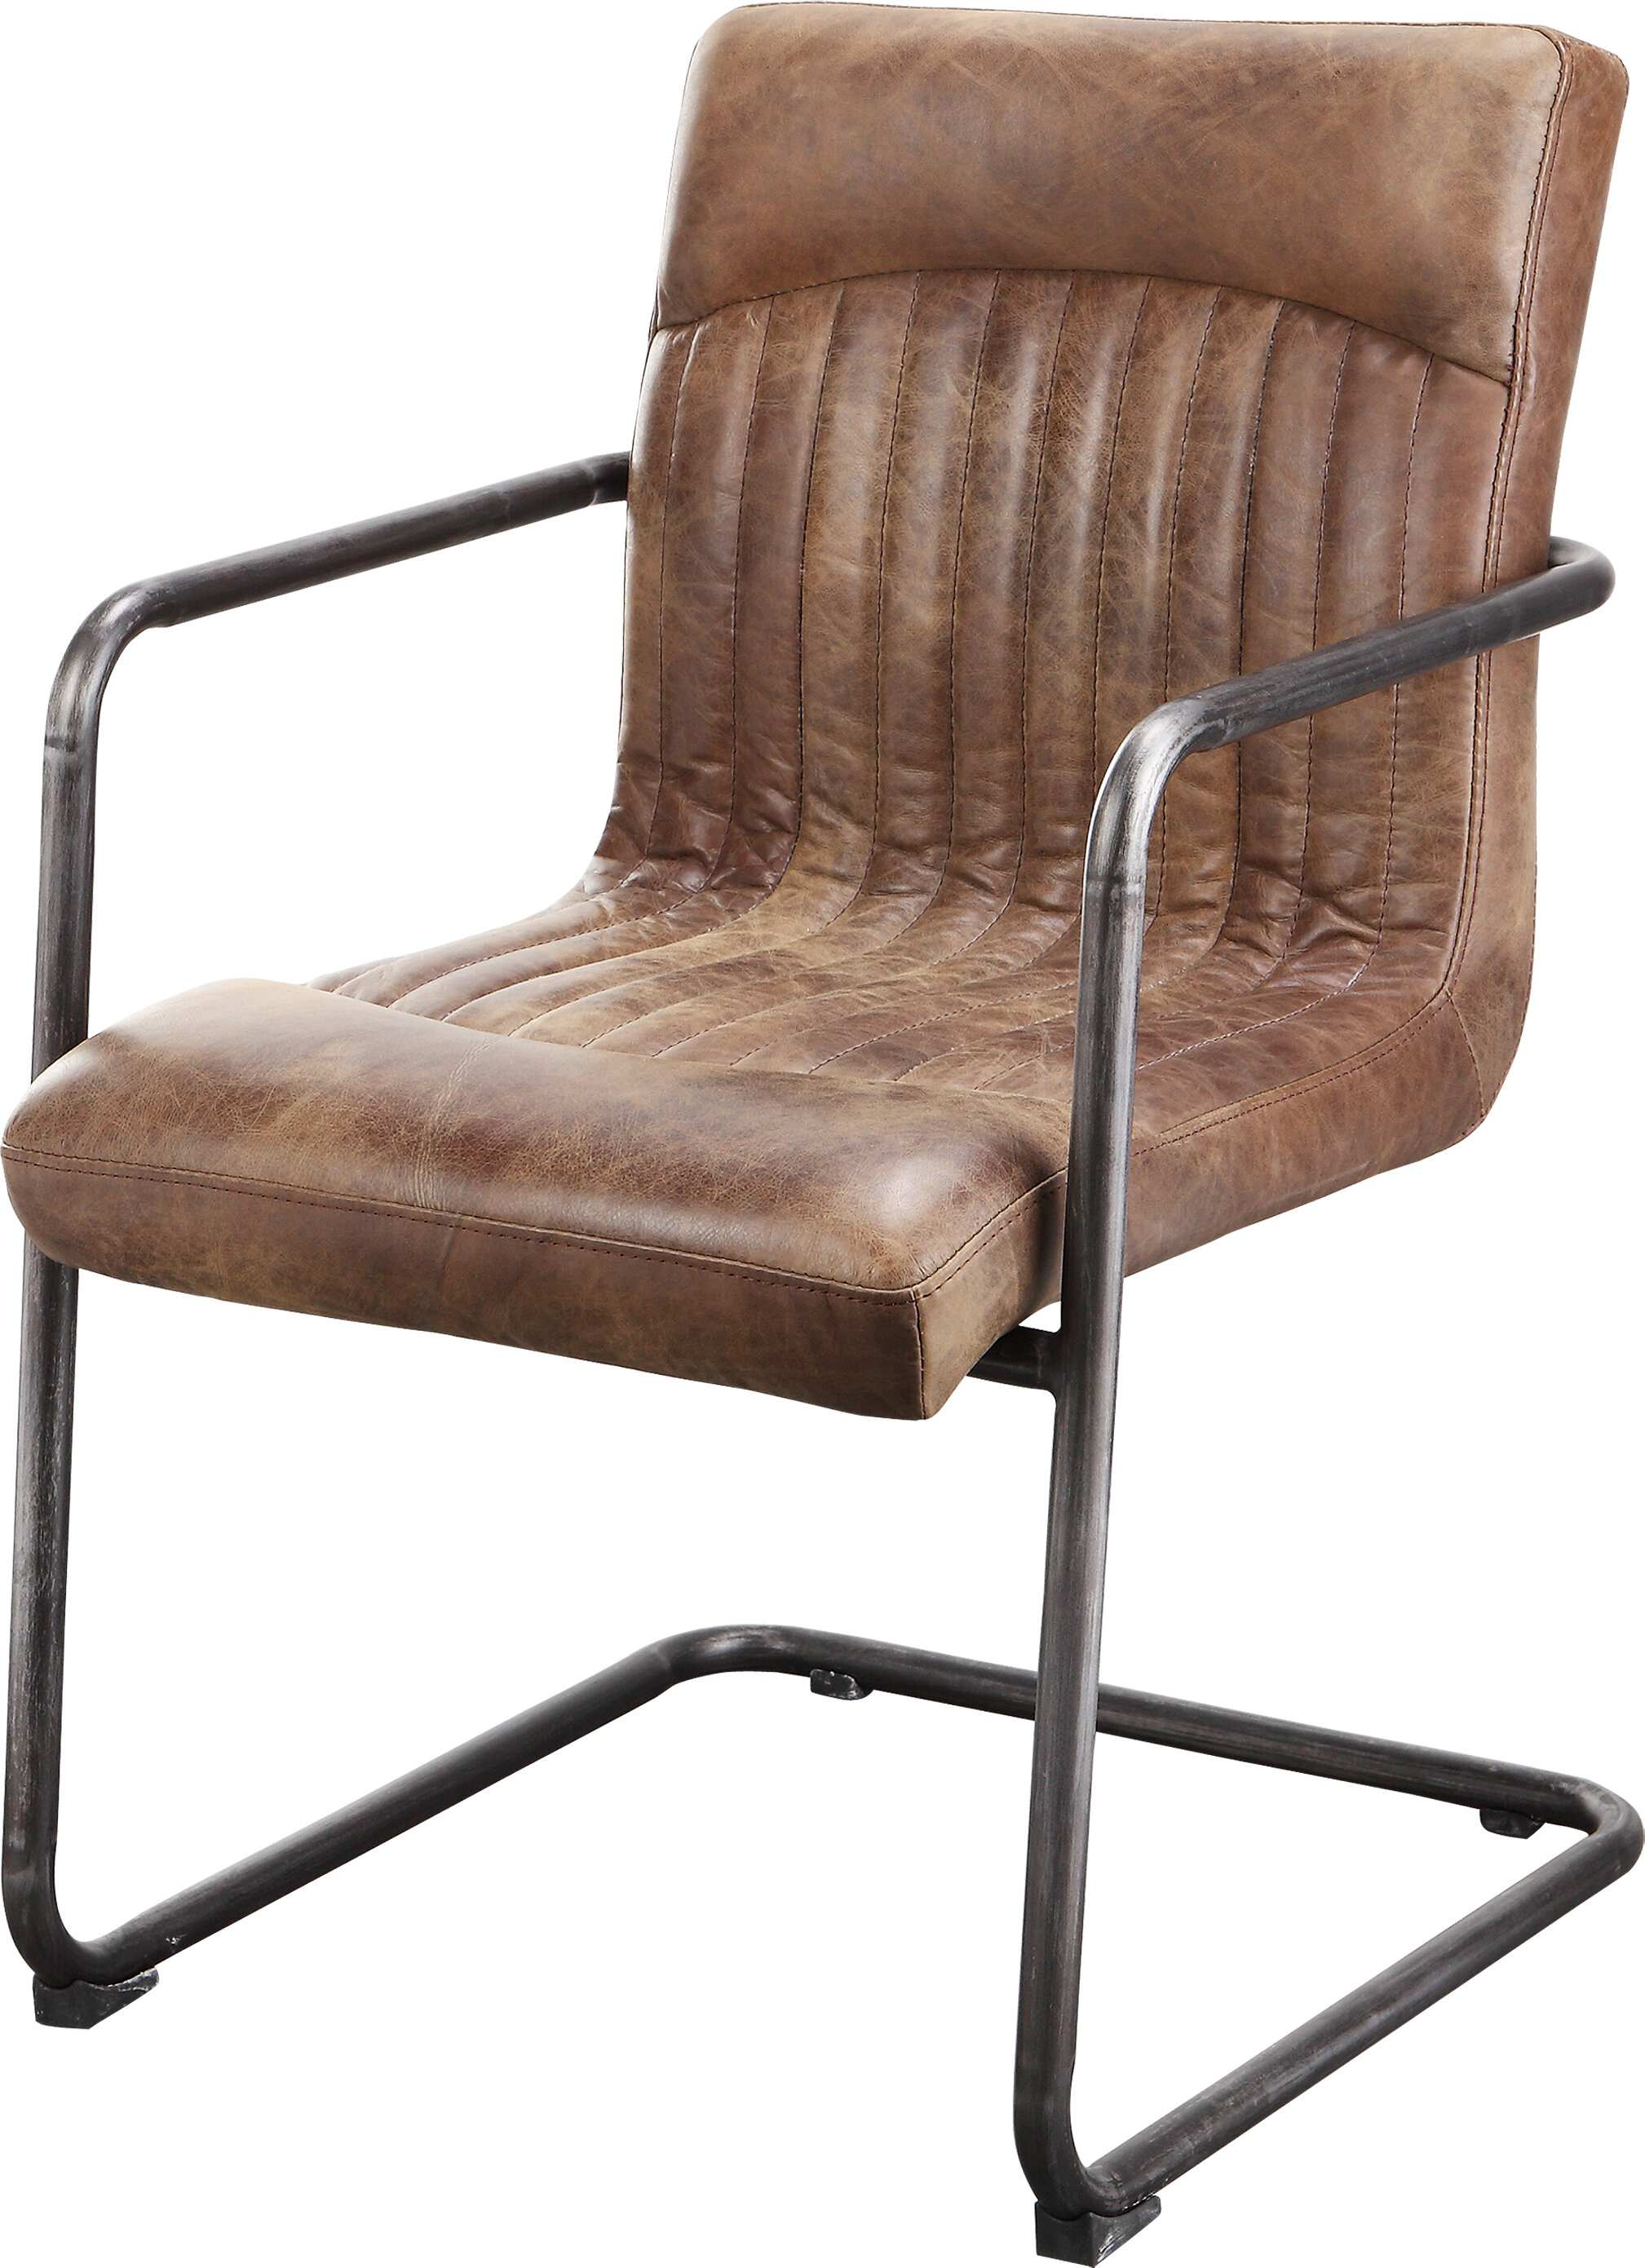 17 Stories Belmiro Genuine Leather Upholstered Arm Chair In Brown Reviews Wayfair